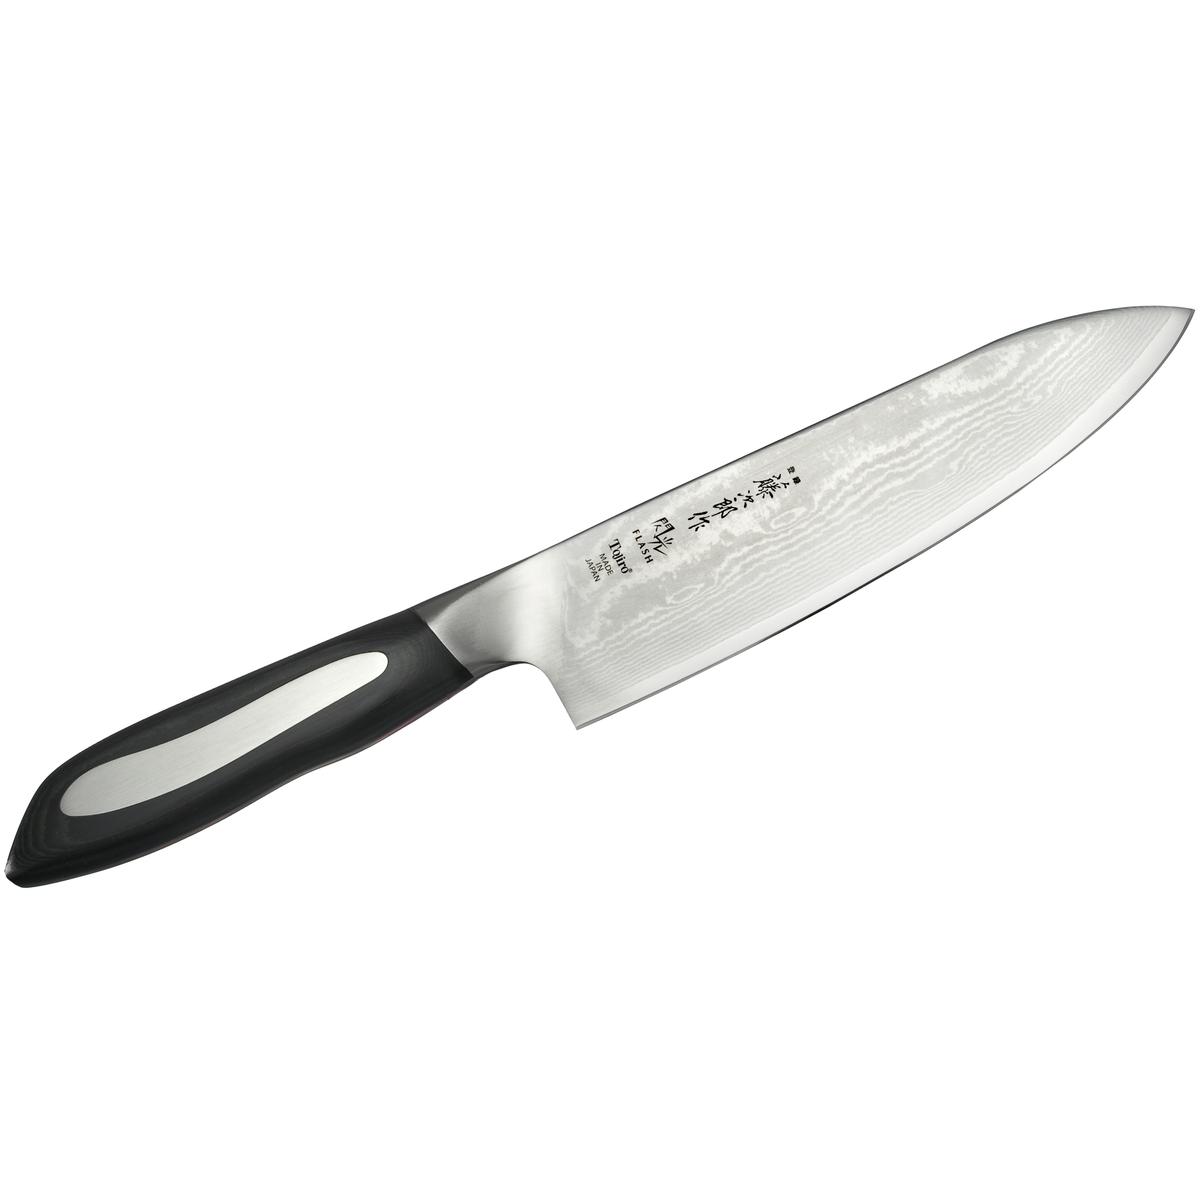 Tojiro Flash VG-10 Nóż szefa kuchni 18cm